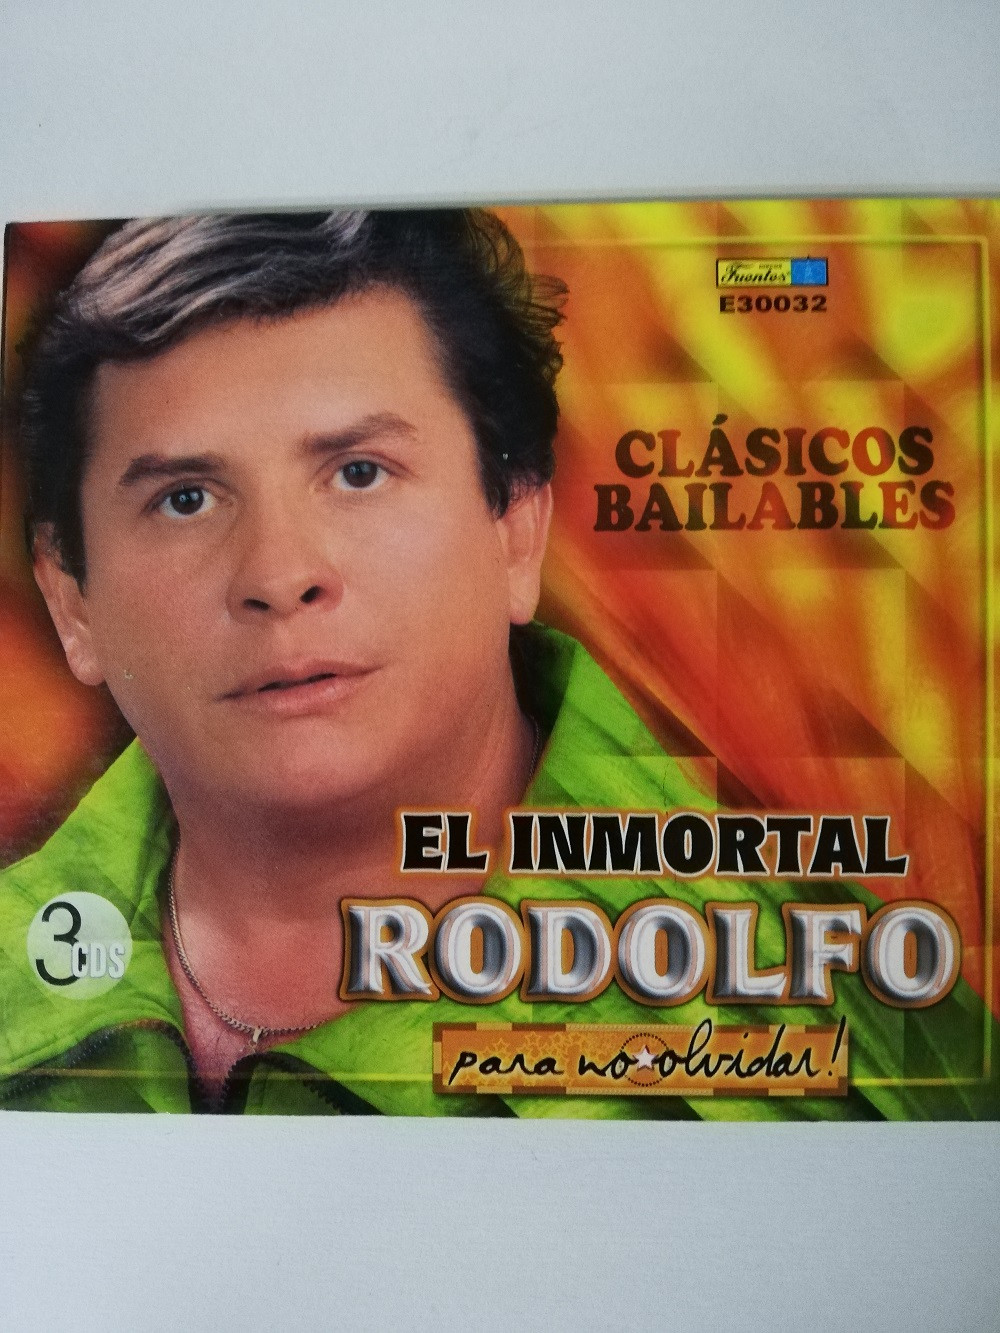 Imagen CD X 3 RODOLFO AICARDI - CLÁSICOS BAILABLES PARA NO OLVIDAR 1